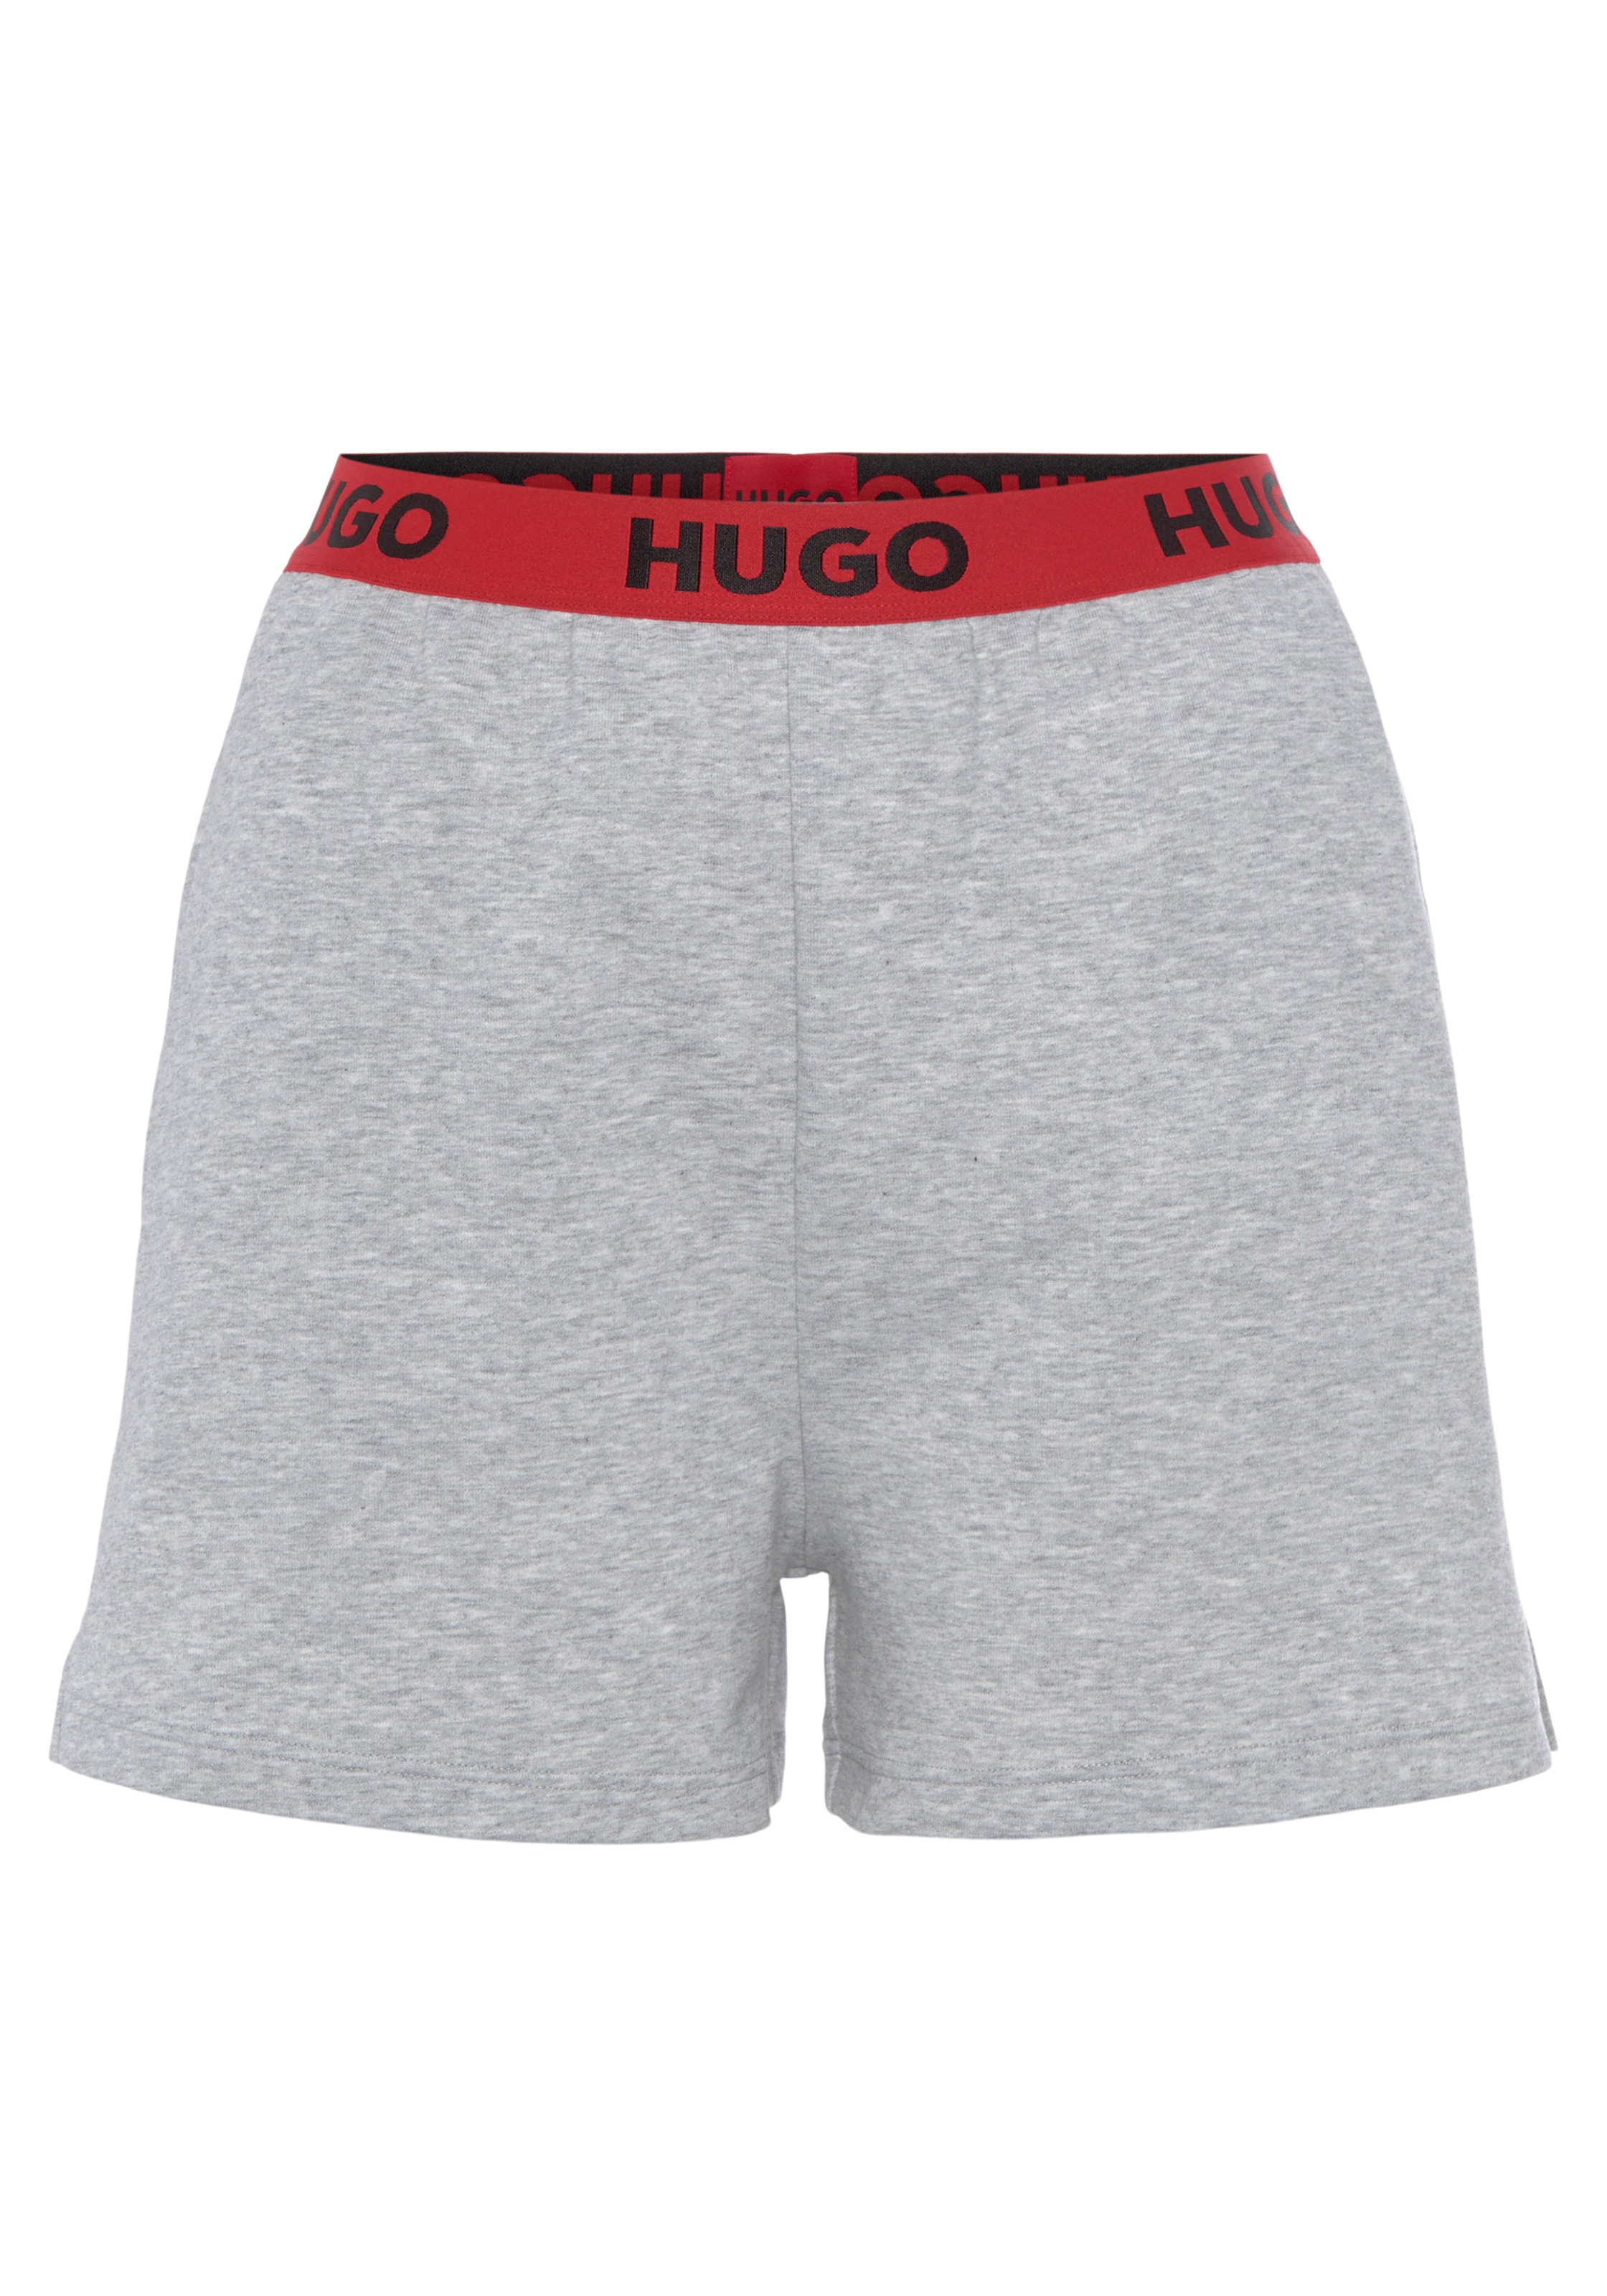 ♕ versandkostenfrei Logo- »SPORTY Sweatshorts HUGO 01«, 10249156 Hugo mit LOGO_SHORTS bestellen Elastikbund